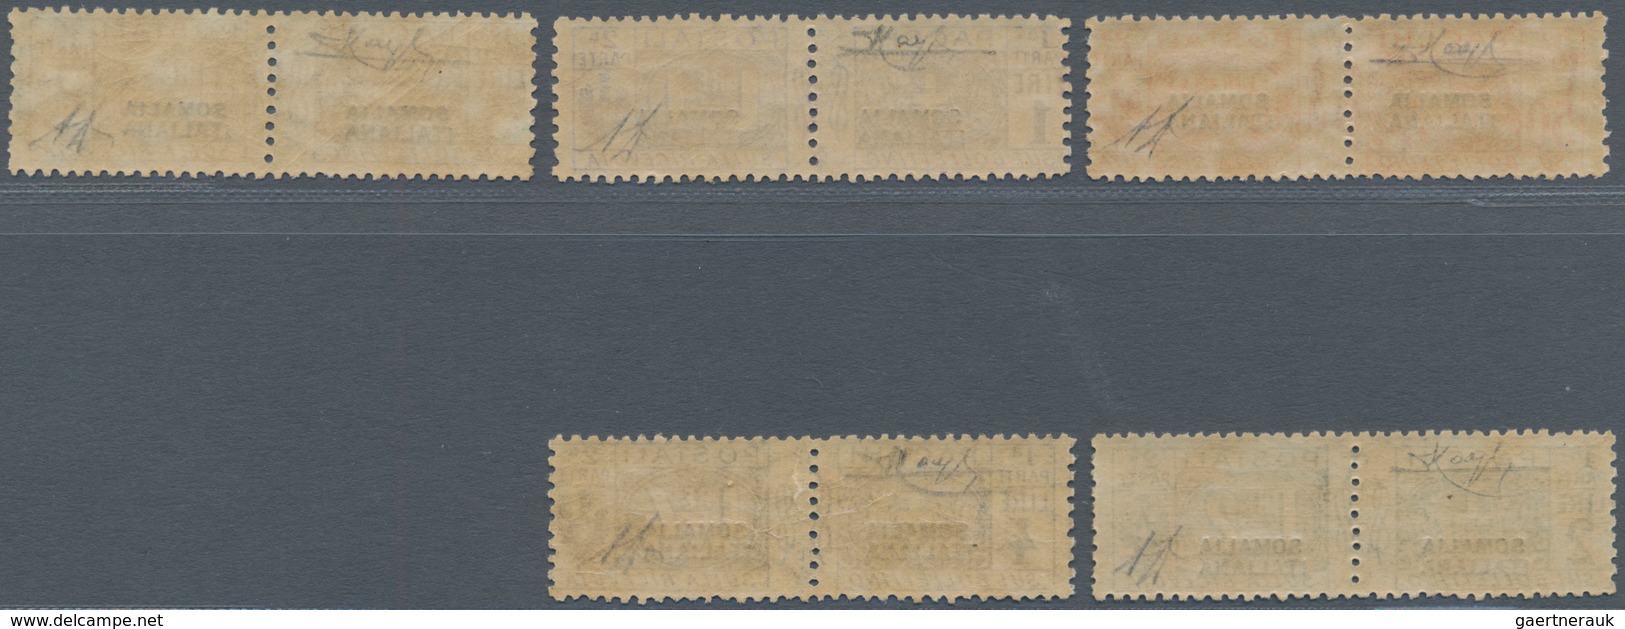 01065 Italienisch-Somaliland - Paketmarken: 1923, "SOMALIA ITALIANA" Overprint On 50c. To 4l., Not Issued, - Somalia